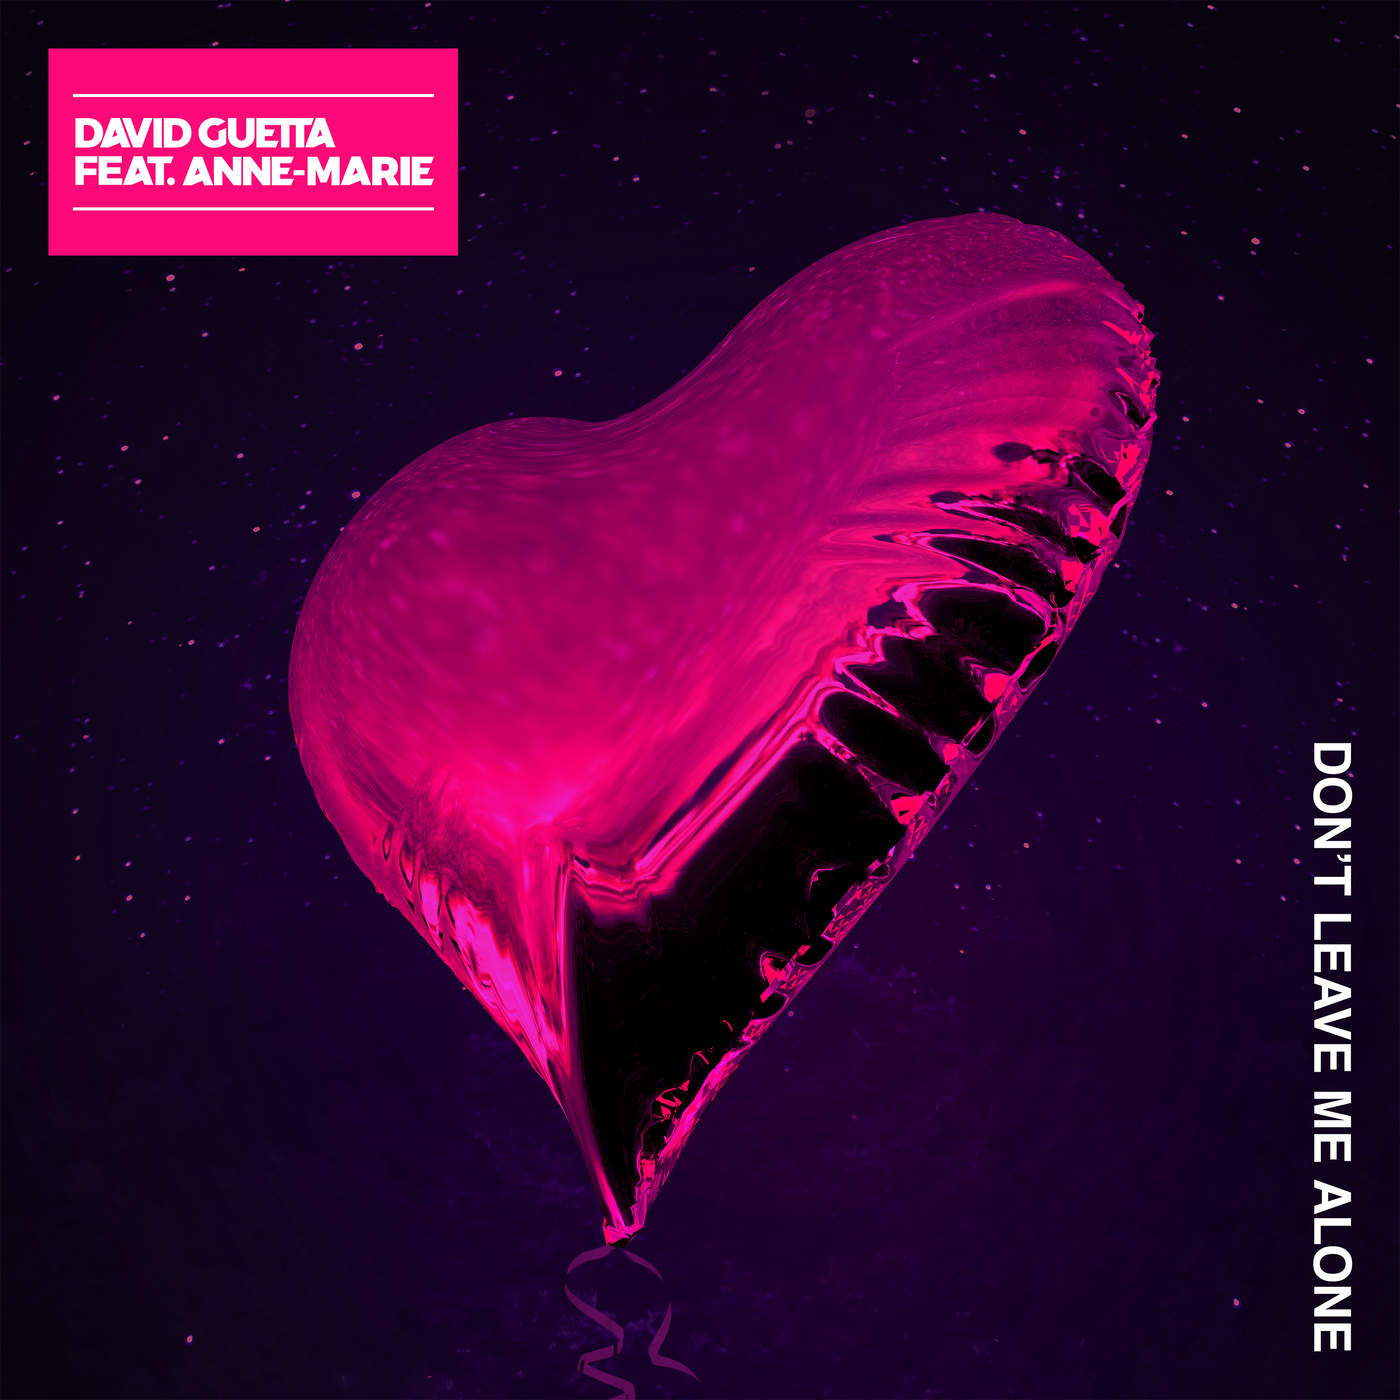 David Guetta - Don't Leave Me Alone (feat. Anne-Marie) - Single - [iTunes + CDQ] - 2018